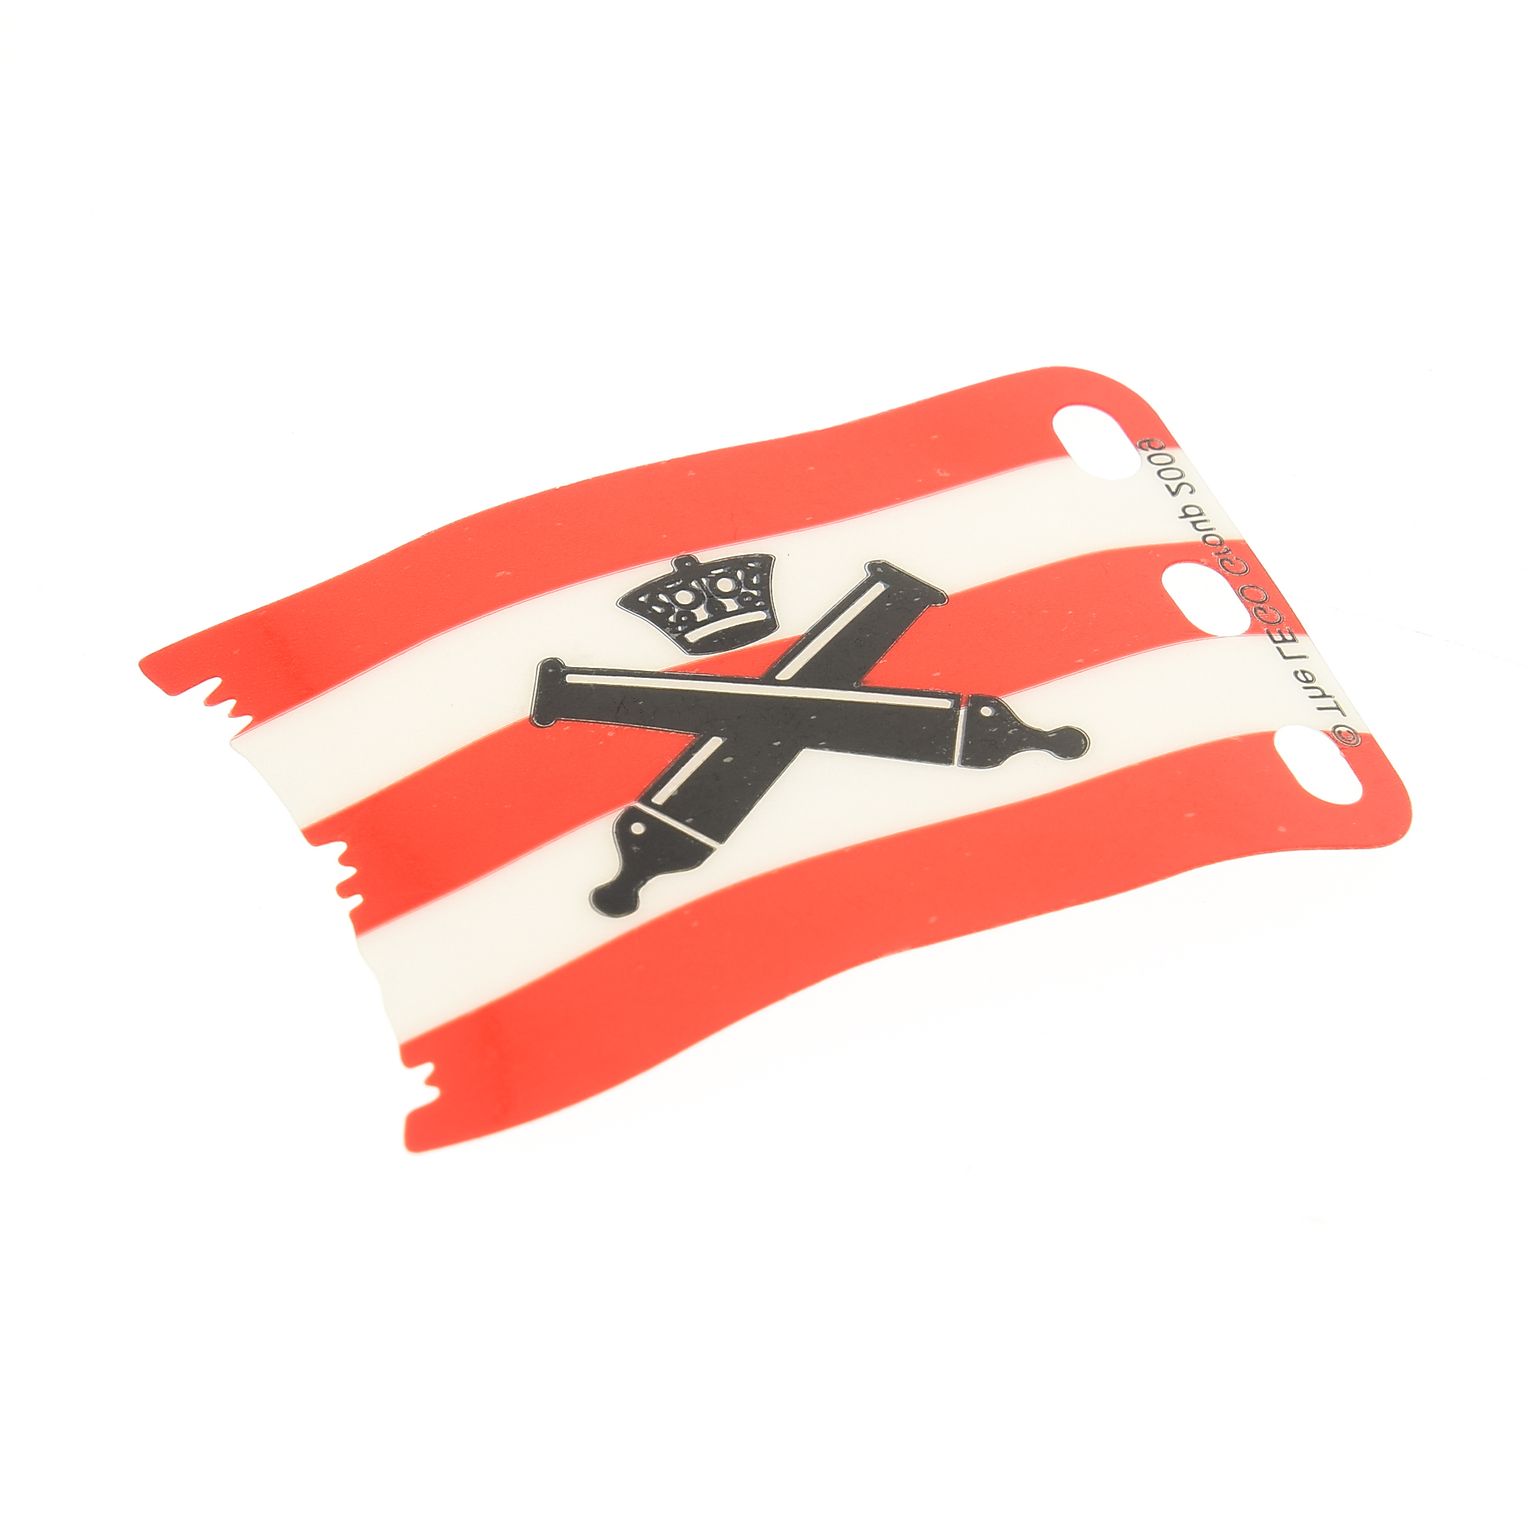 10 x Lego Fahne Flagge 2x2 rot weiß Kanonen Krone 2335pb003 Totenkopf 2335p30